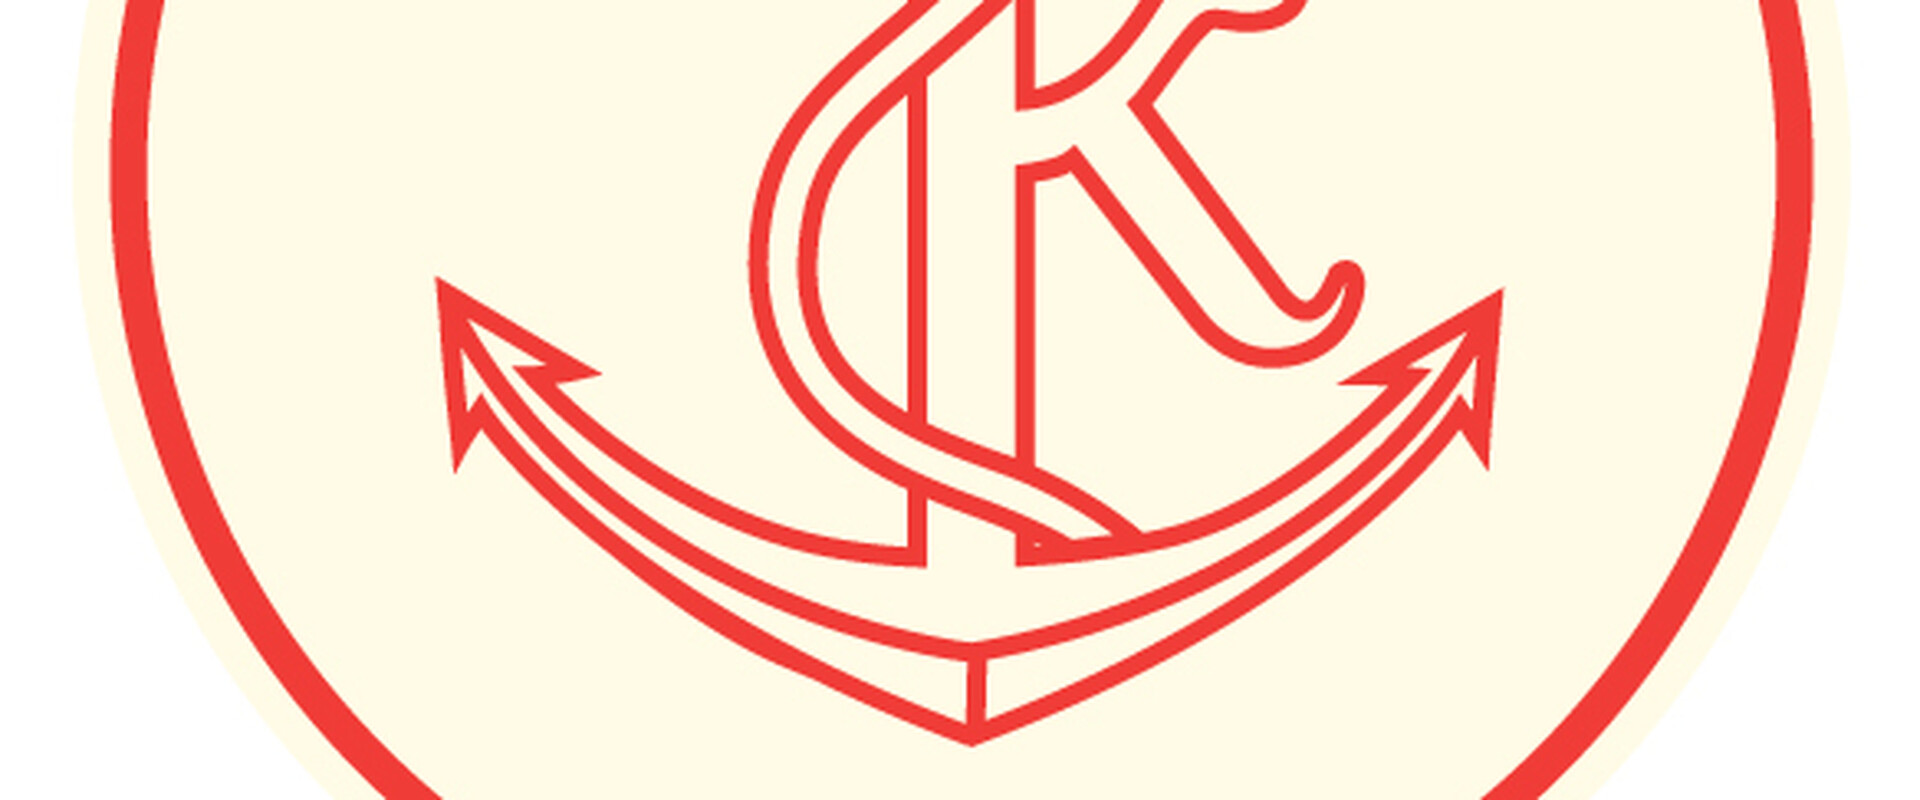 Kristiinankaupunki logo pun nega rgb6